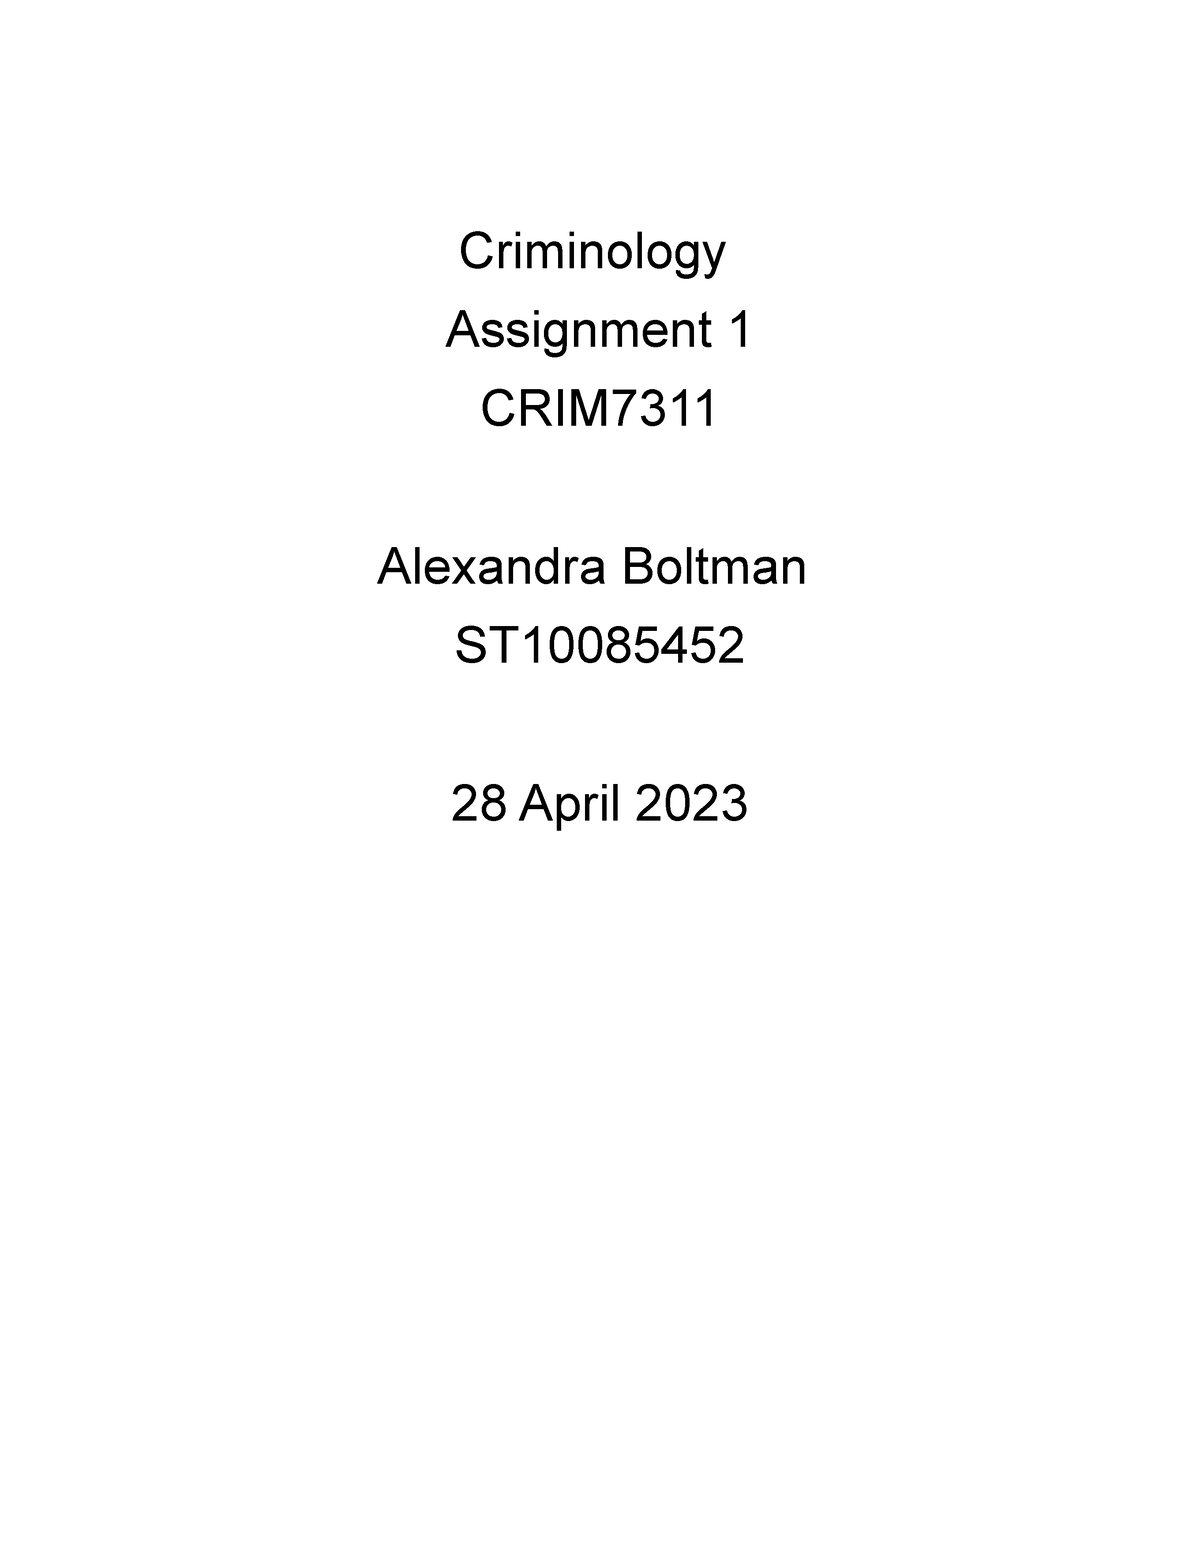 criminology room assignment april 2023